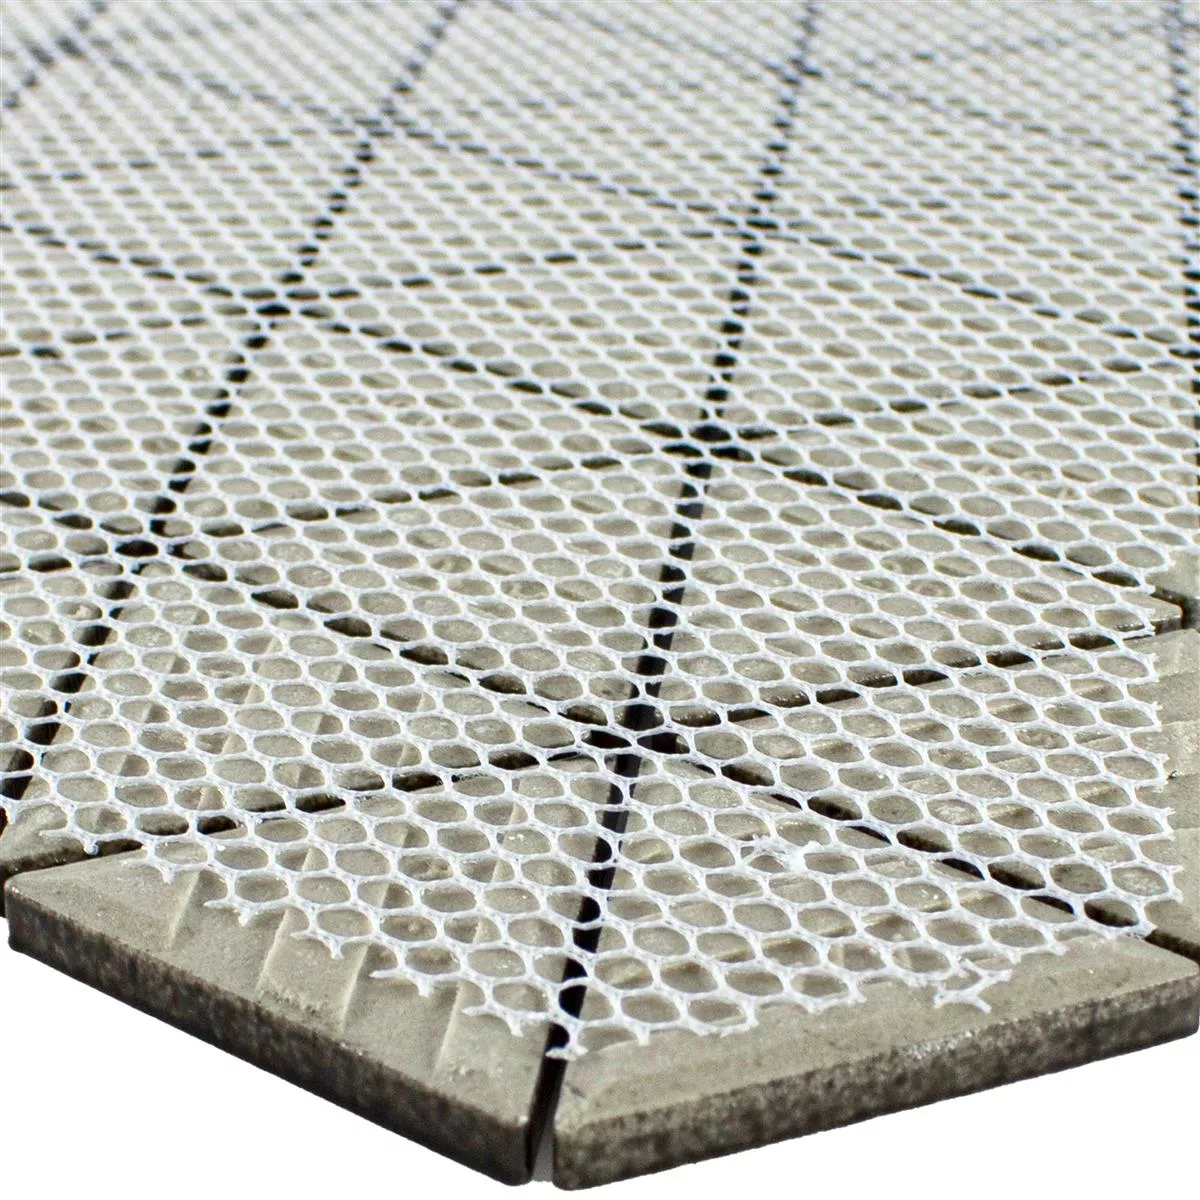 Sample Ceramic Mosaic Tiles Arvada Triangle Blanc Mat